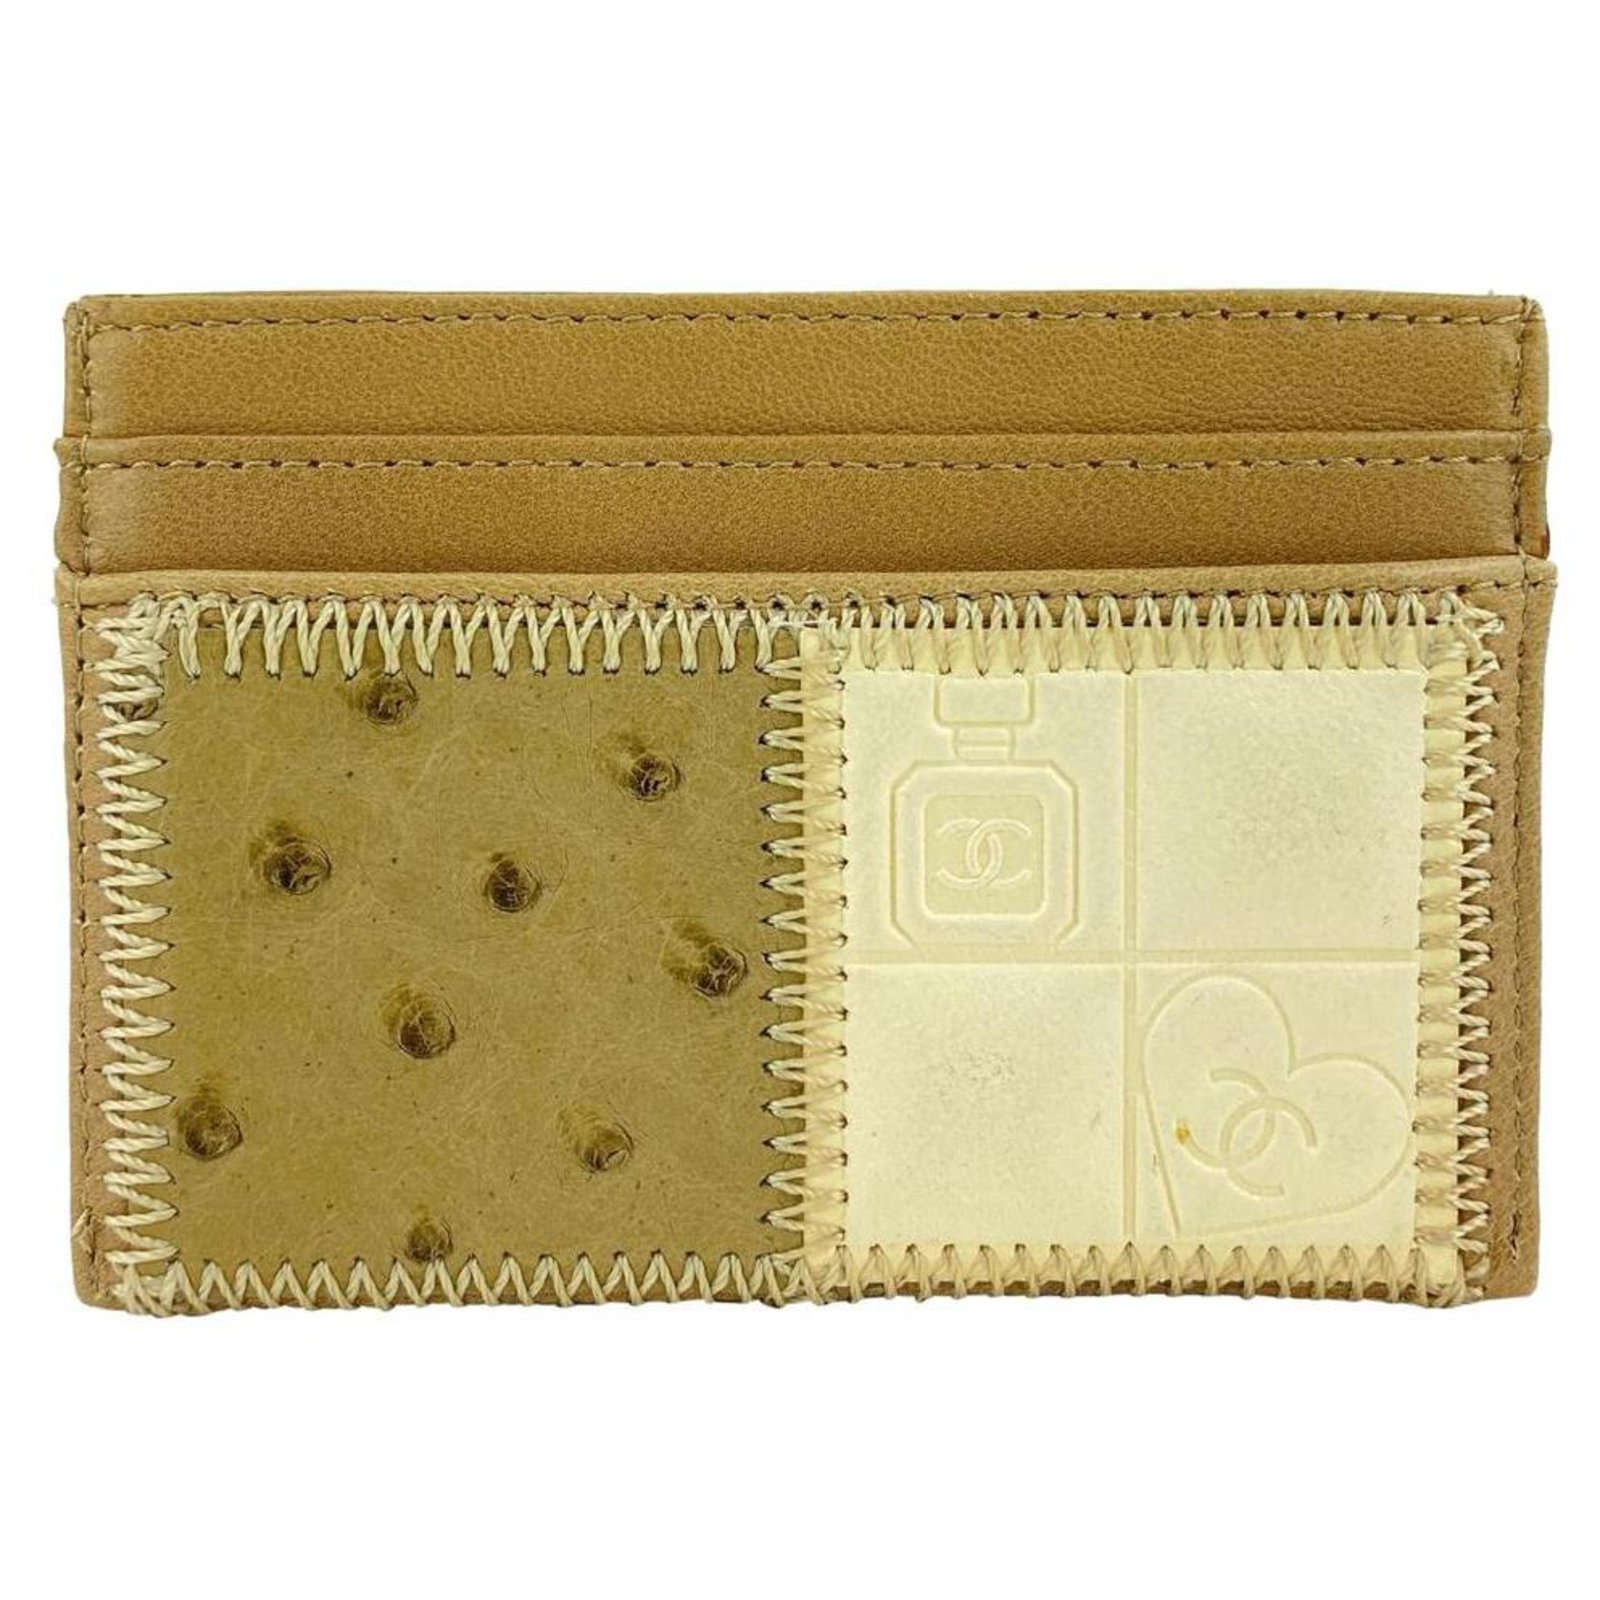 Chanel Beige Ostrich Card Holder CC Wallet Case 24CC1117 Leather